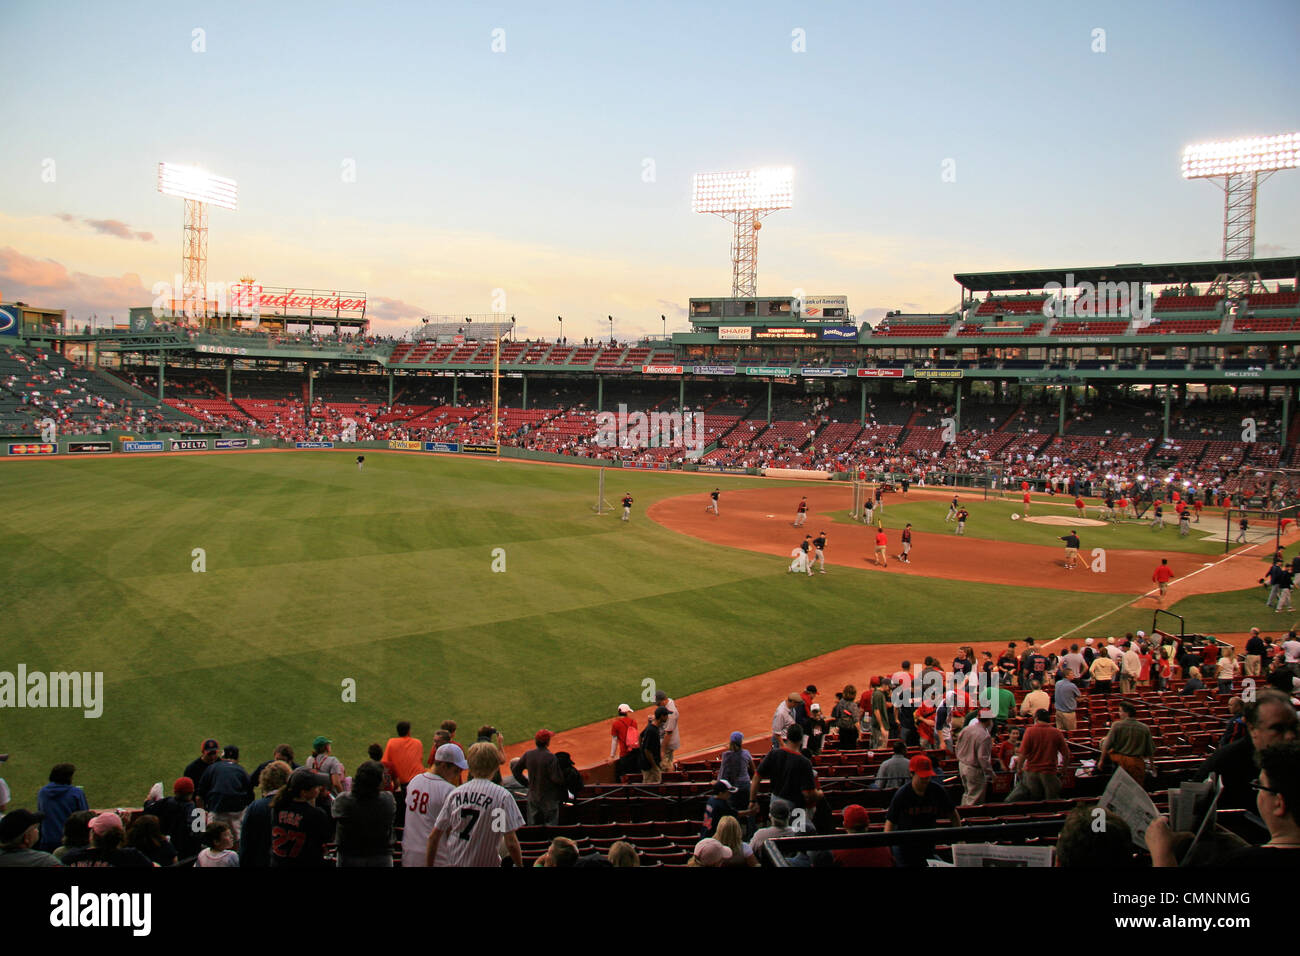 Fenway Park, home of the Boston Red Sox Major League Baseball team in Boston, Massachusetts, United States.(28 Sep 2007) Stock Photo